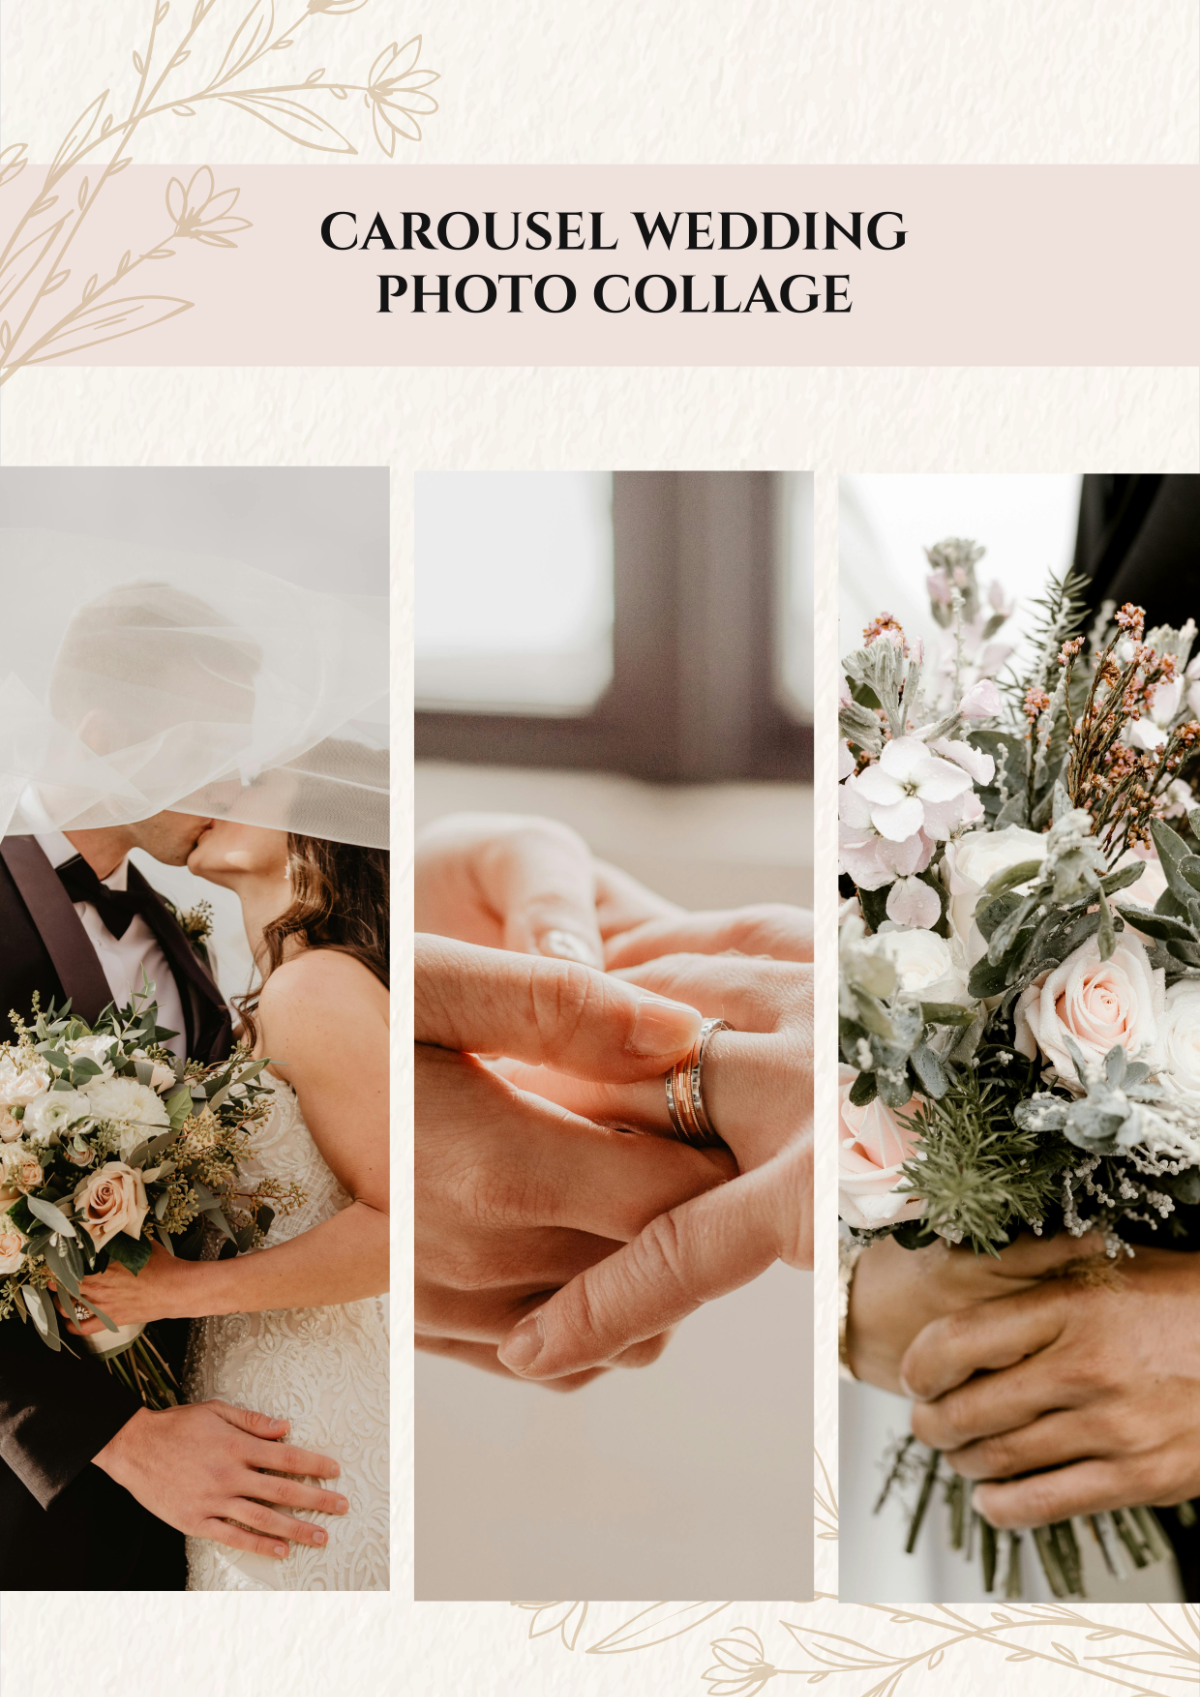 Carousel Wedding Photo Collage Template